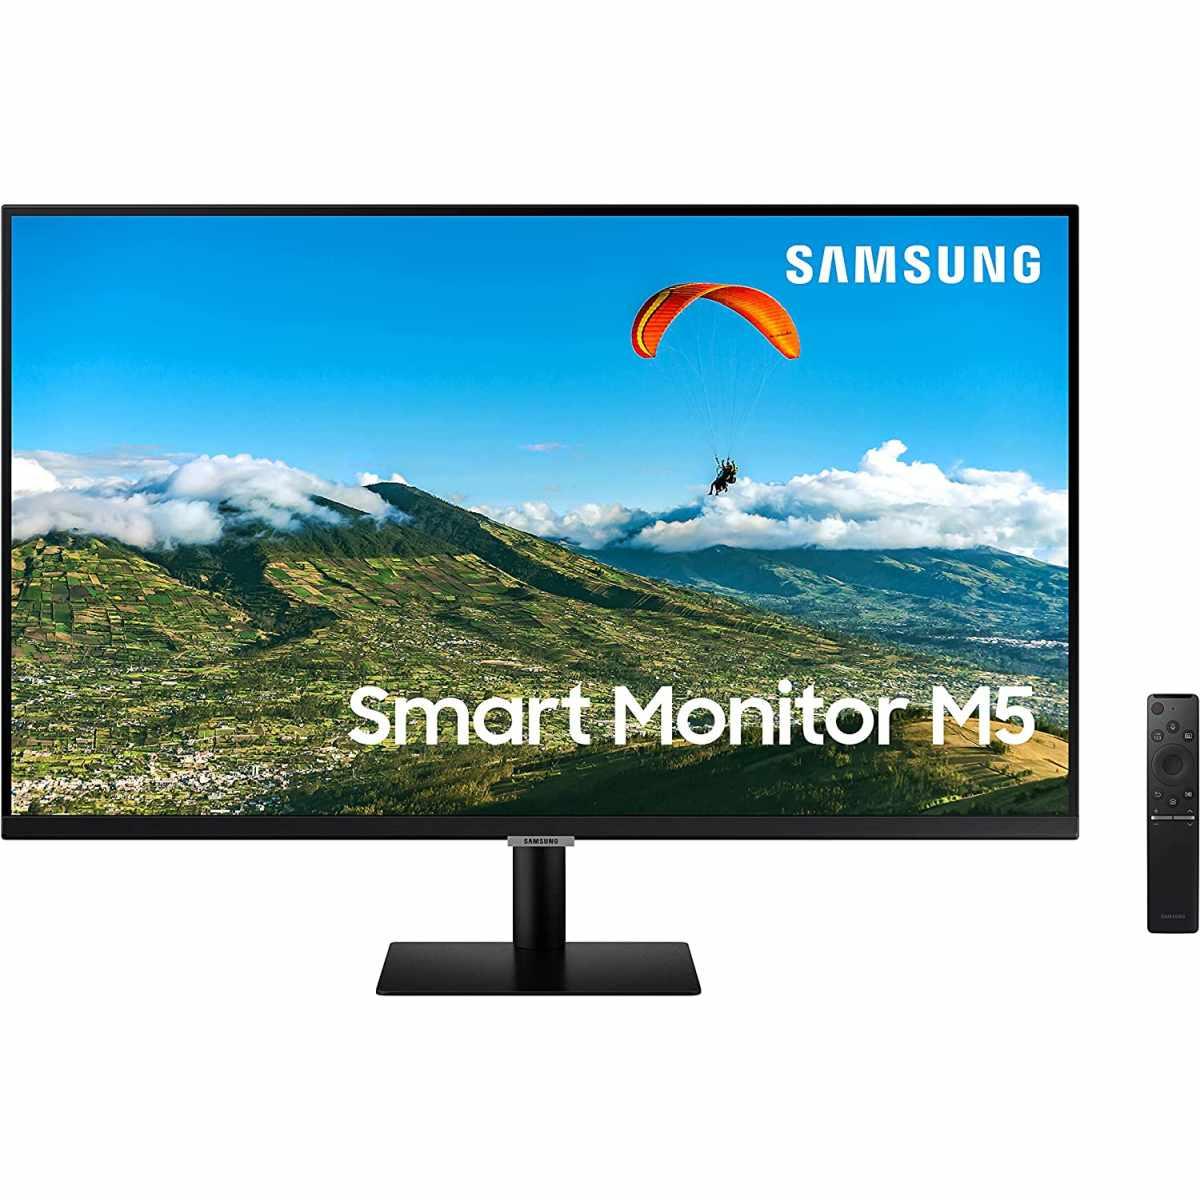 Samsung Samsung Smart Monitor M5 LED 27 FullHD 1080p WiFi